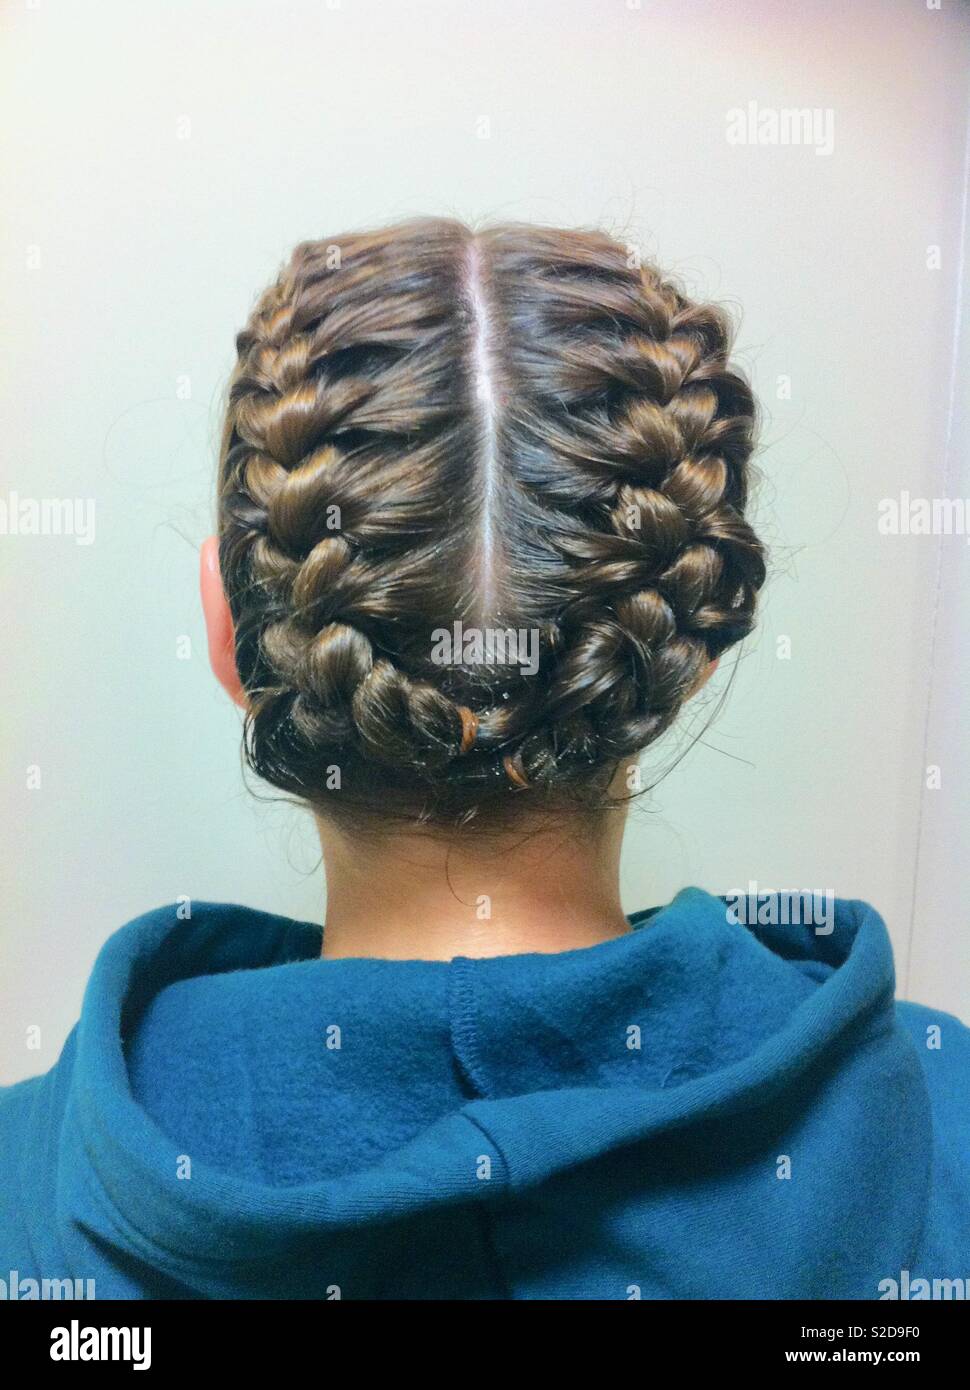 French braids hairstyle Stock Photo - Alamy